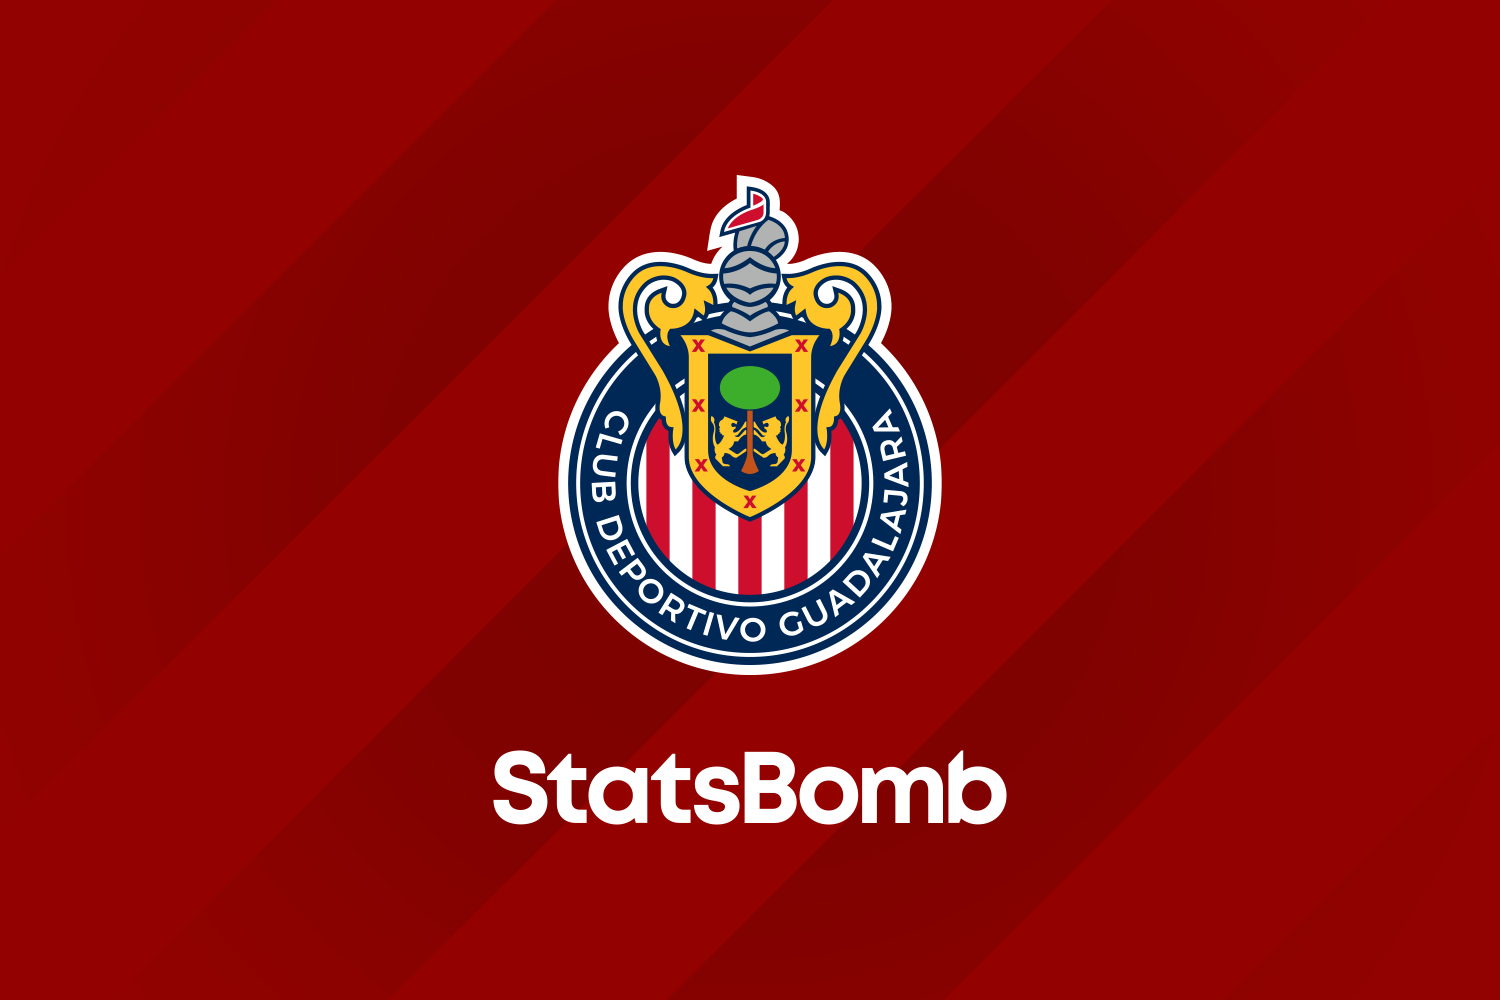 StatsBomb Continues Mexican Growth With Club Deportivo Guadalajara